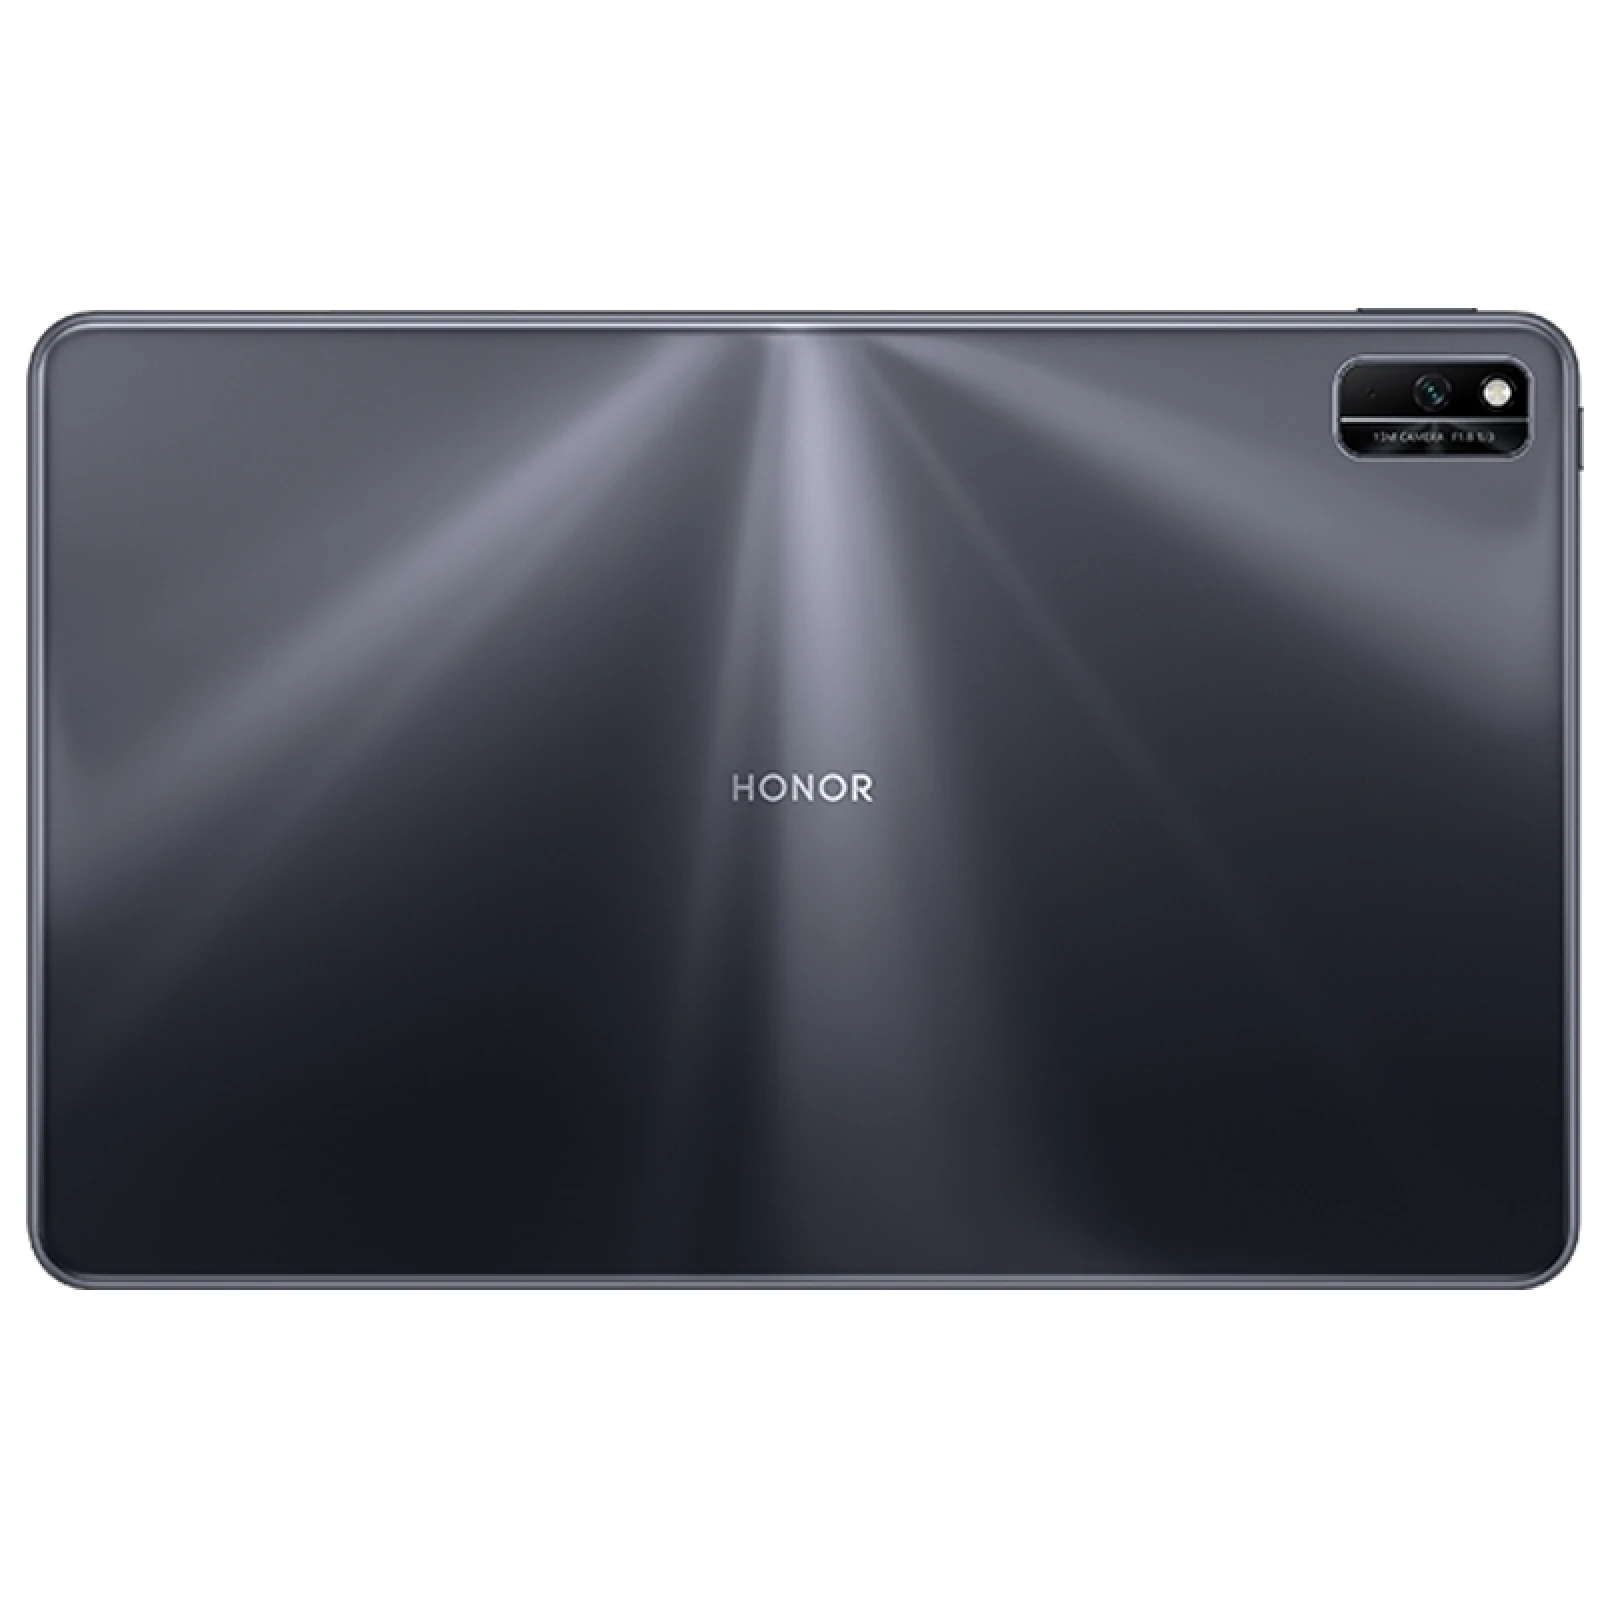 Huawei Honor V6 KRJ-W09 Wifi6+ 10.4 inch 6GB RAM 64GB ROM Magic UI 3.1(Android 10.1) Hisilicon Kirin 985 Octa Core Tablet PC